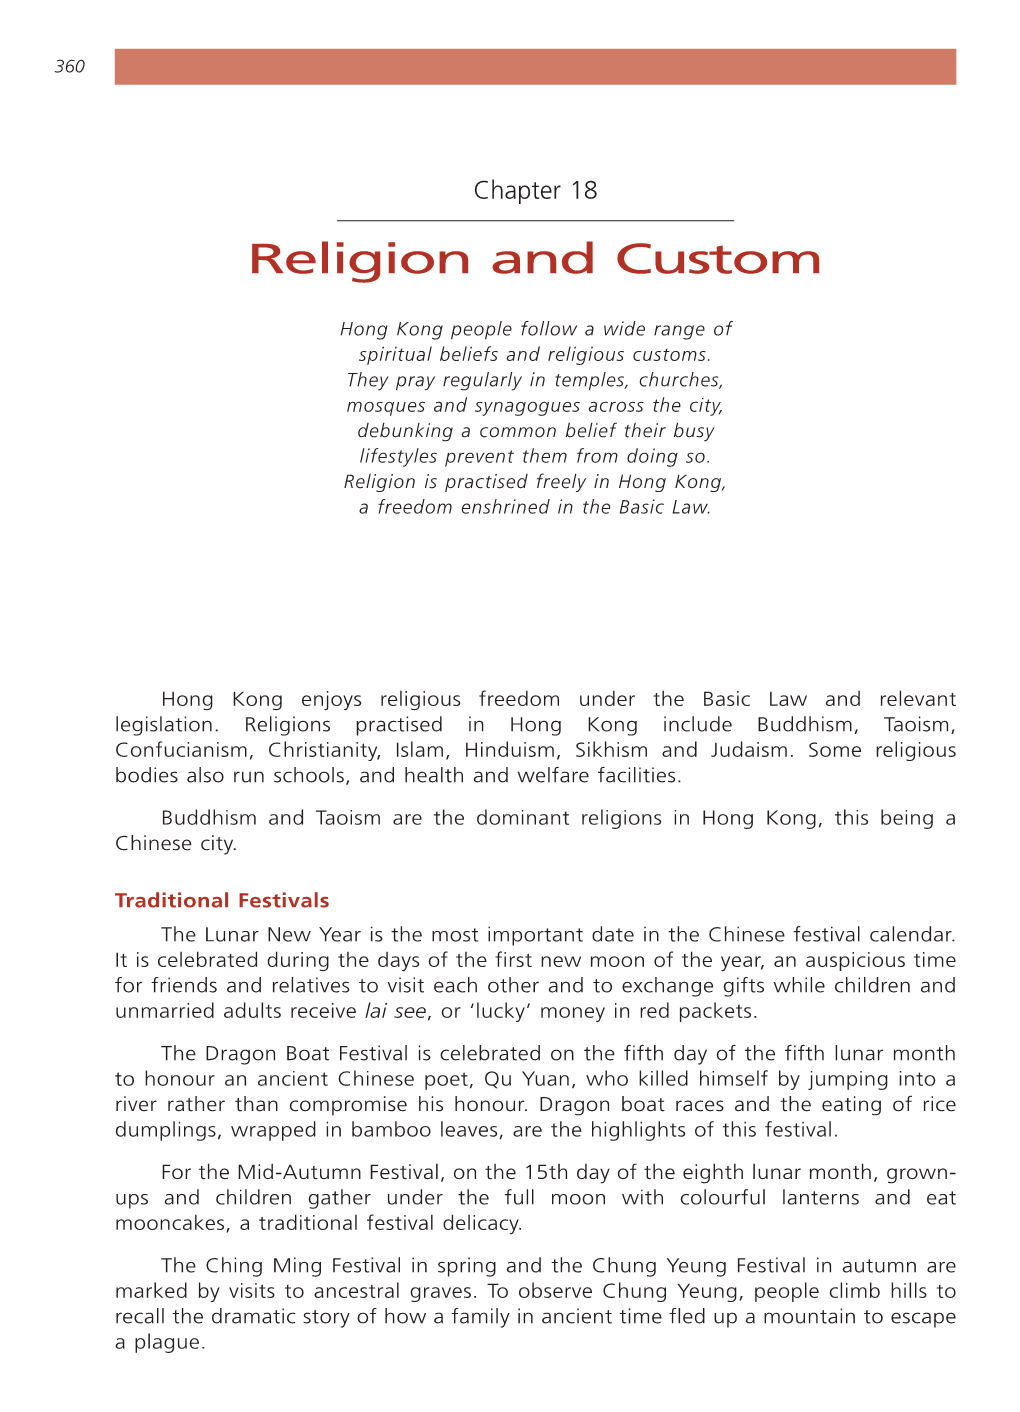 Religion and Custom